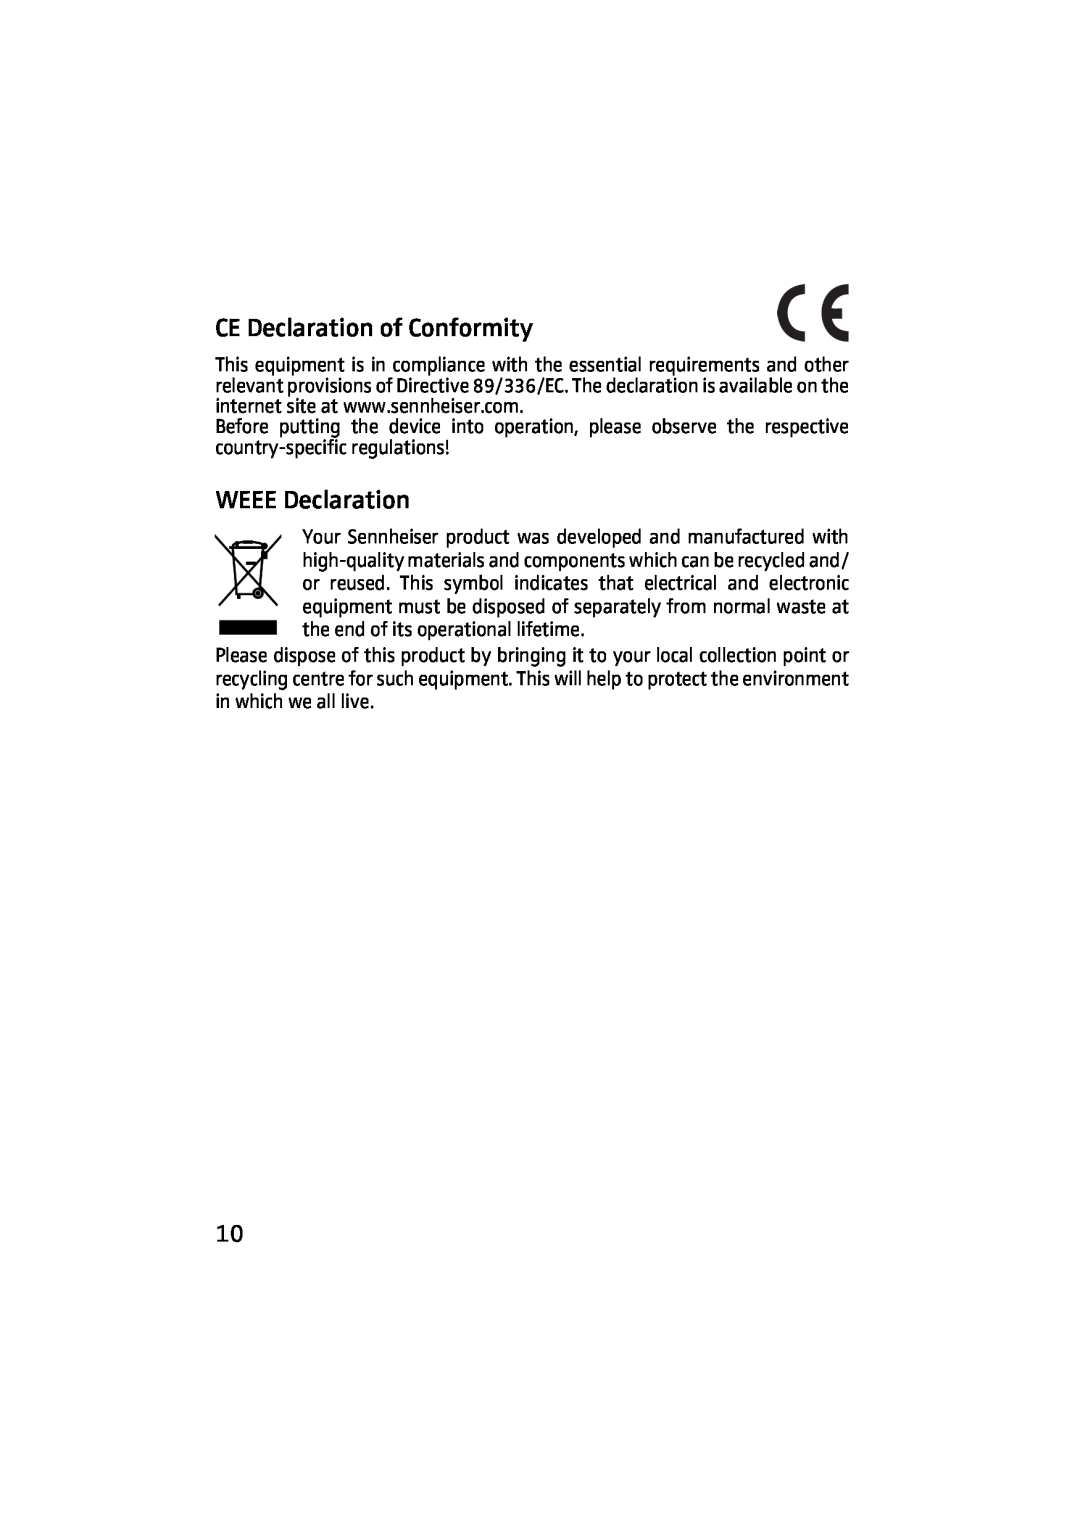 Sennheiser HME 43-K manual CE Declaration of Conformity, WEEE Declaration 